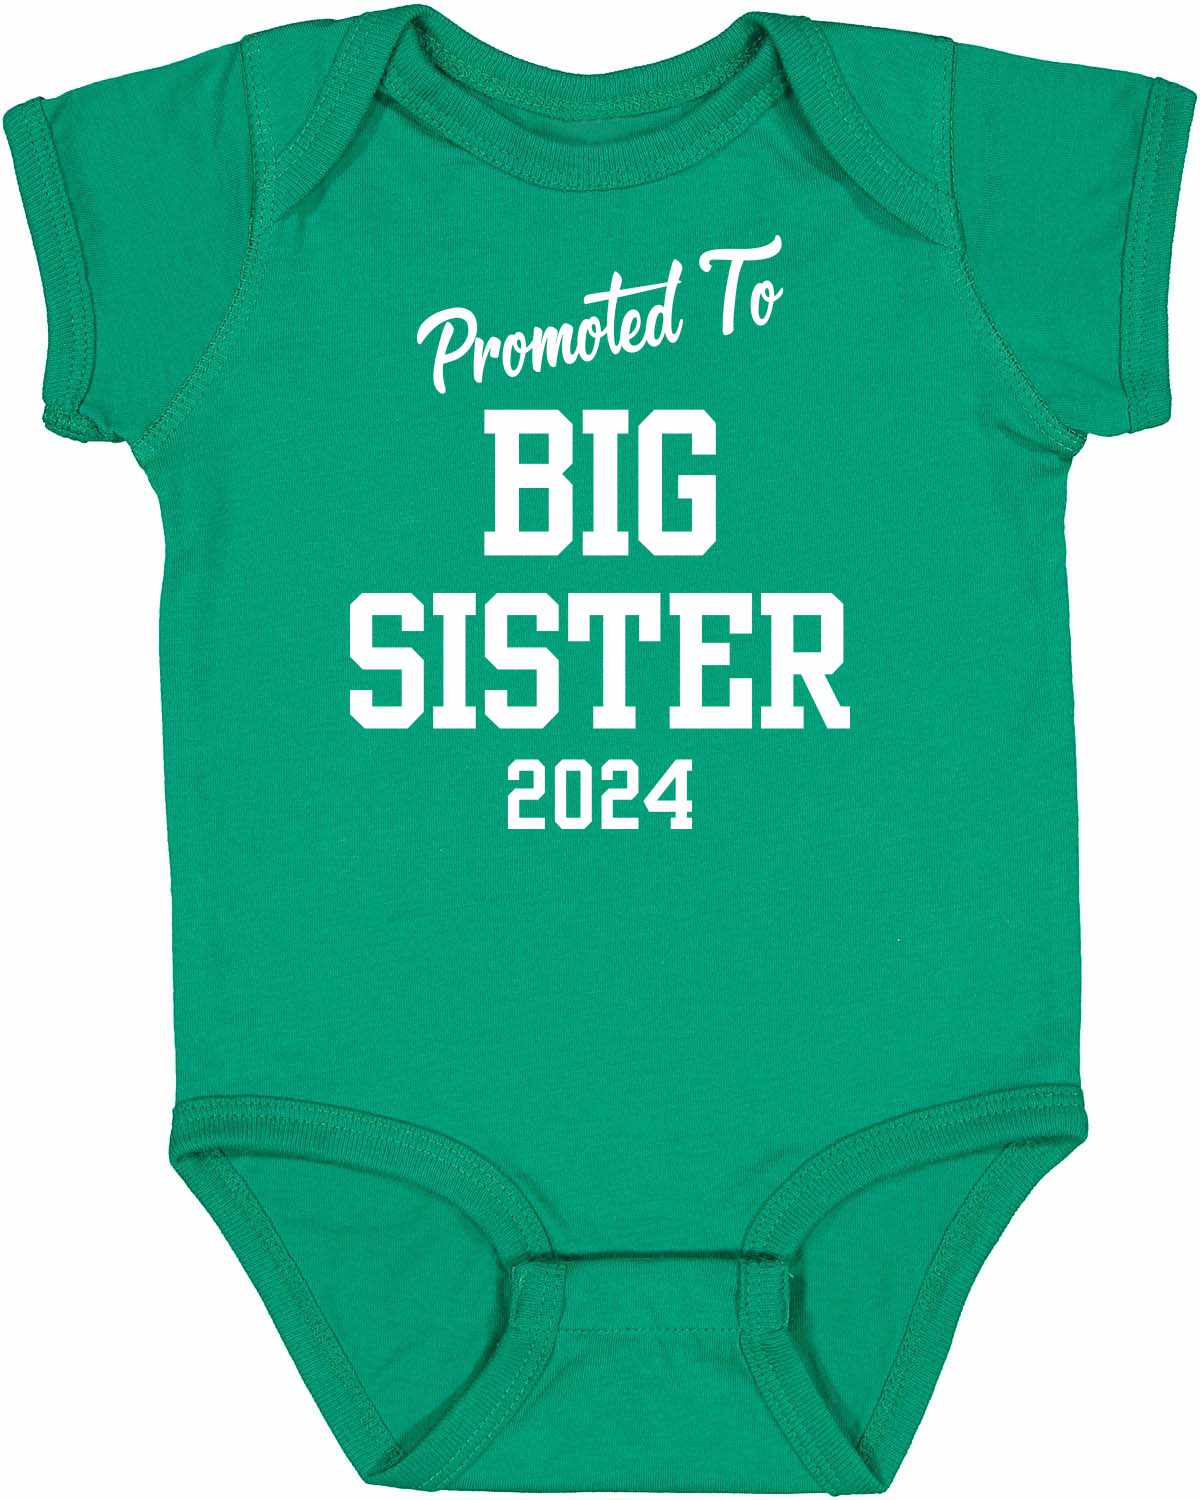 Promoted to Big Sister 2024 on Infant BodySuit